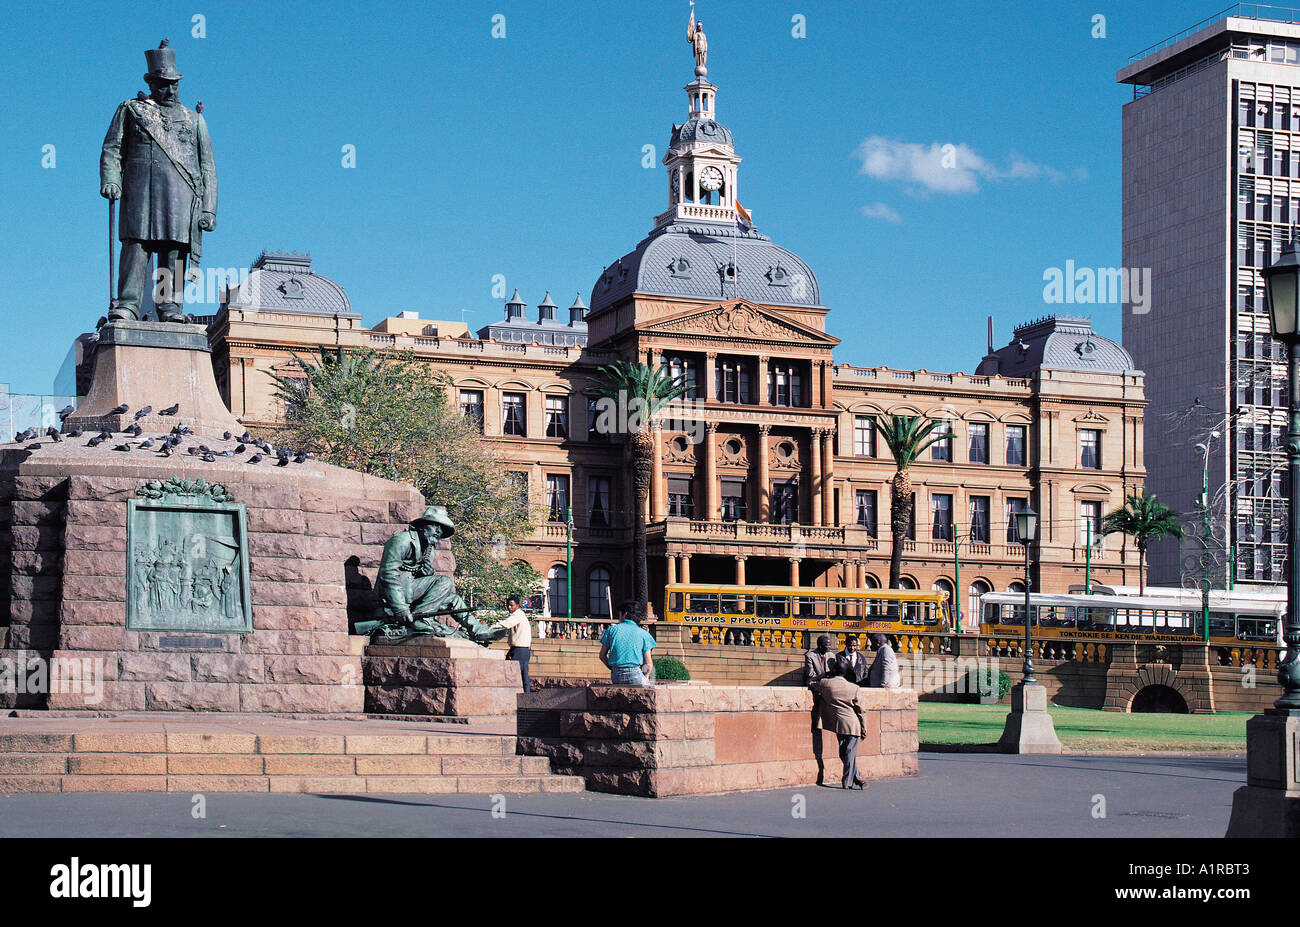 Statua di Paul Kruger da Anton van Wouw Chiesa Piazza Pretoria Sudafrica Foto Stock